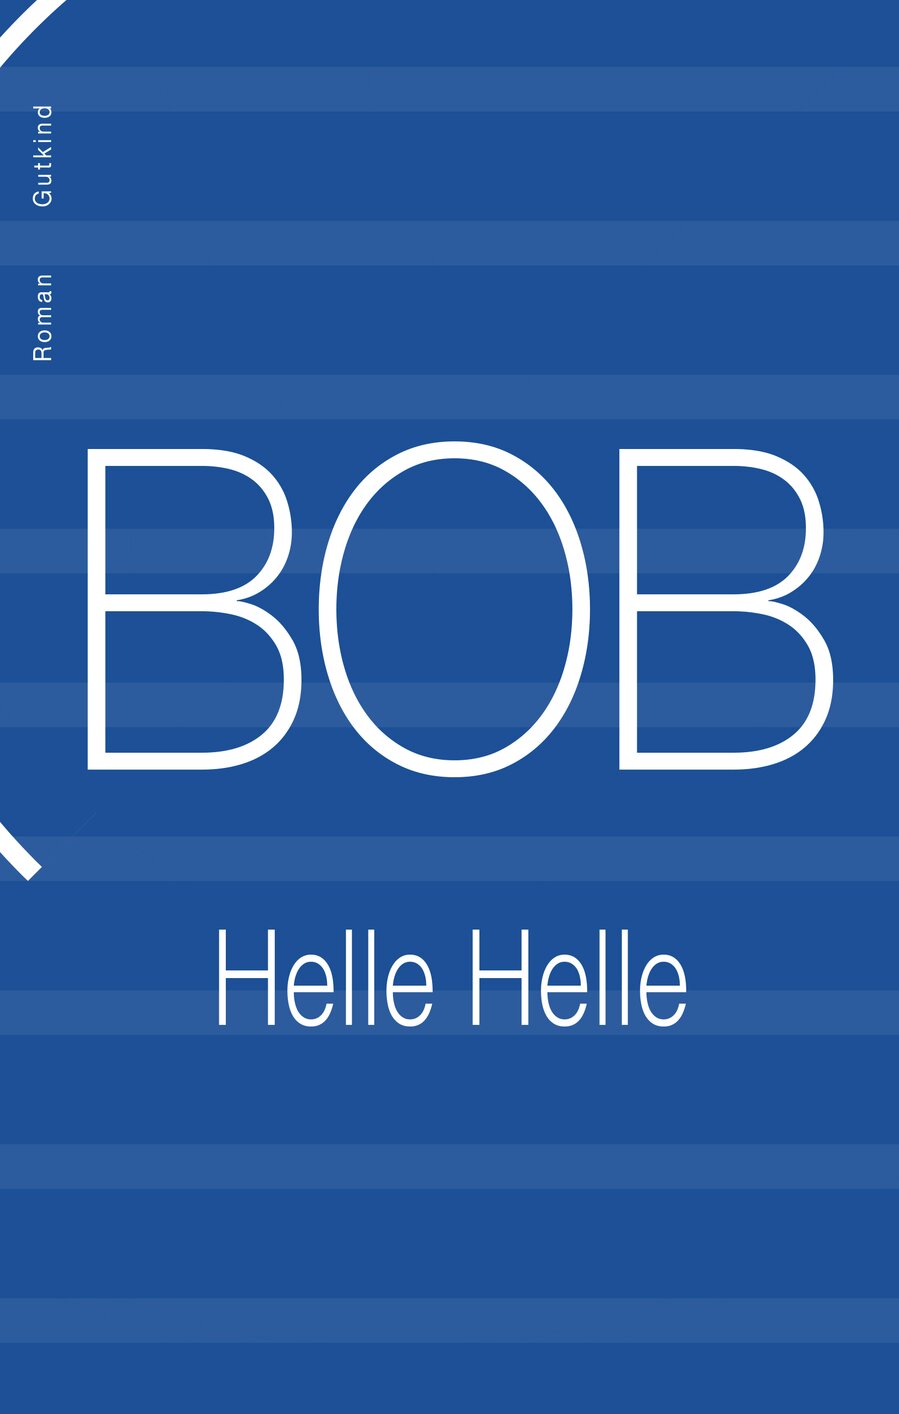 Helle helle bob forside 10.09.20 (002)